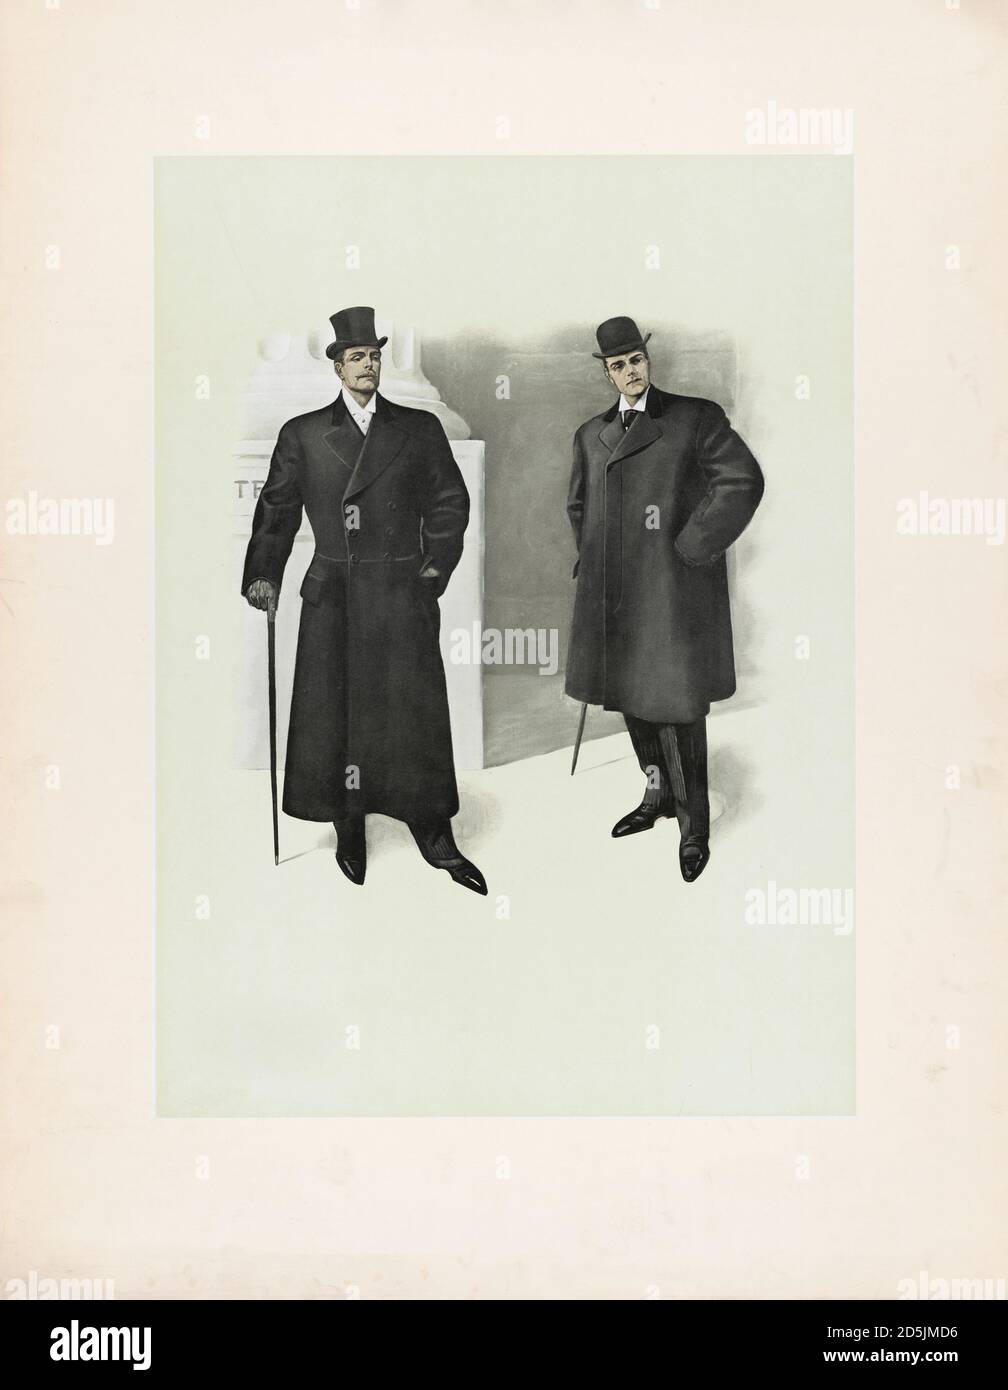 Retro illustration of men's fashion. New York, USA. 1900s Stock Photo